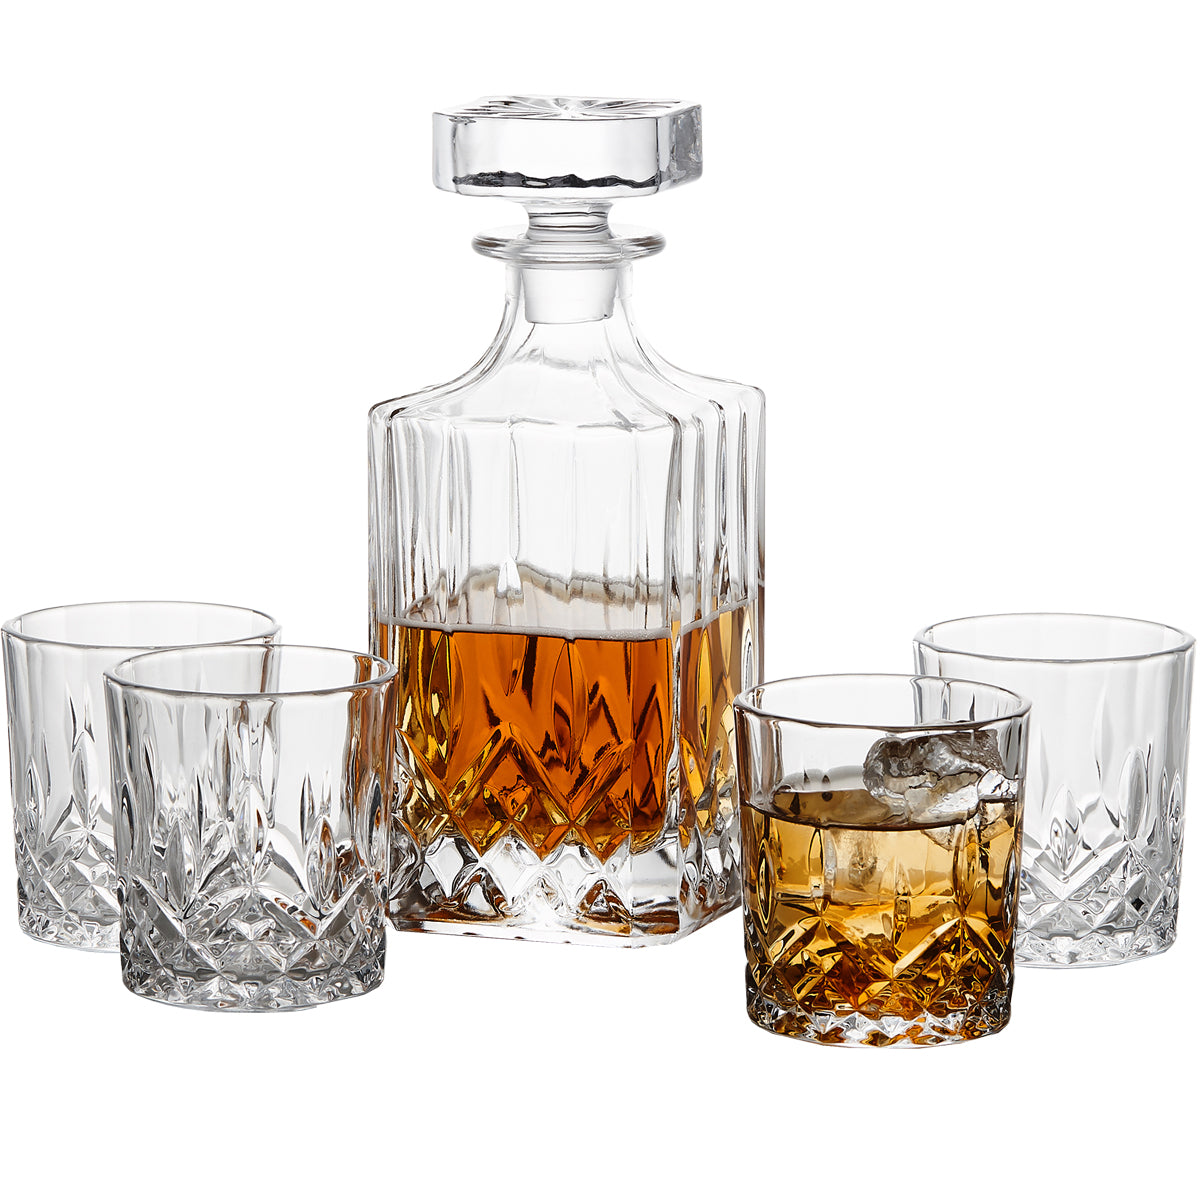 Vintorio GoodGlassware Whiskey Decanter Set with 4 Whiskey Glasses